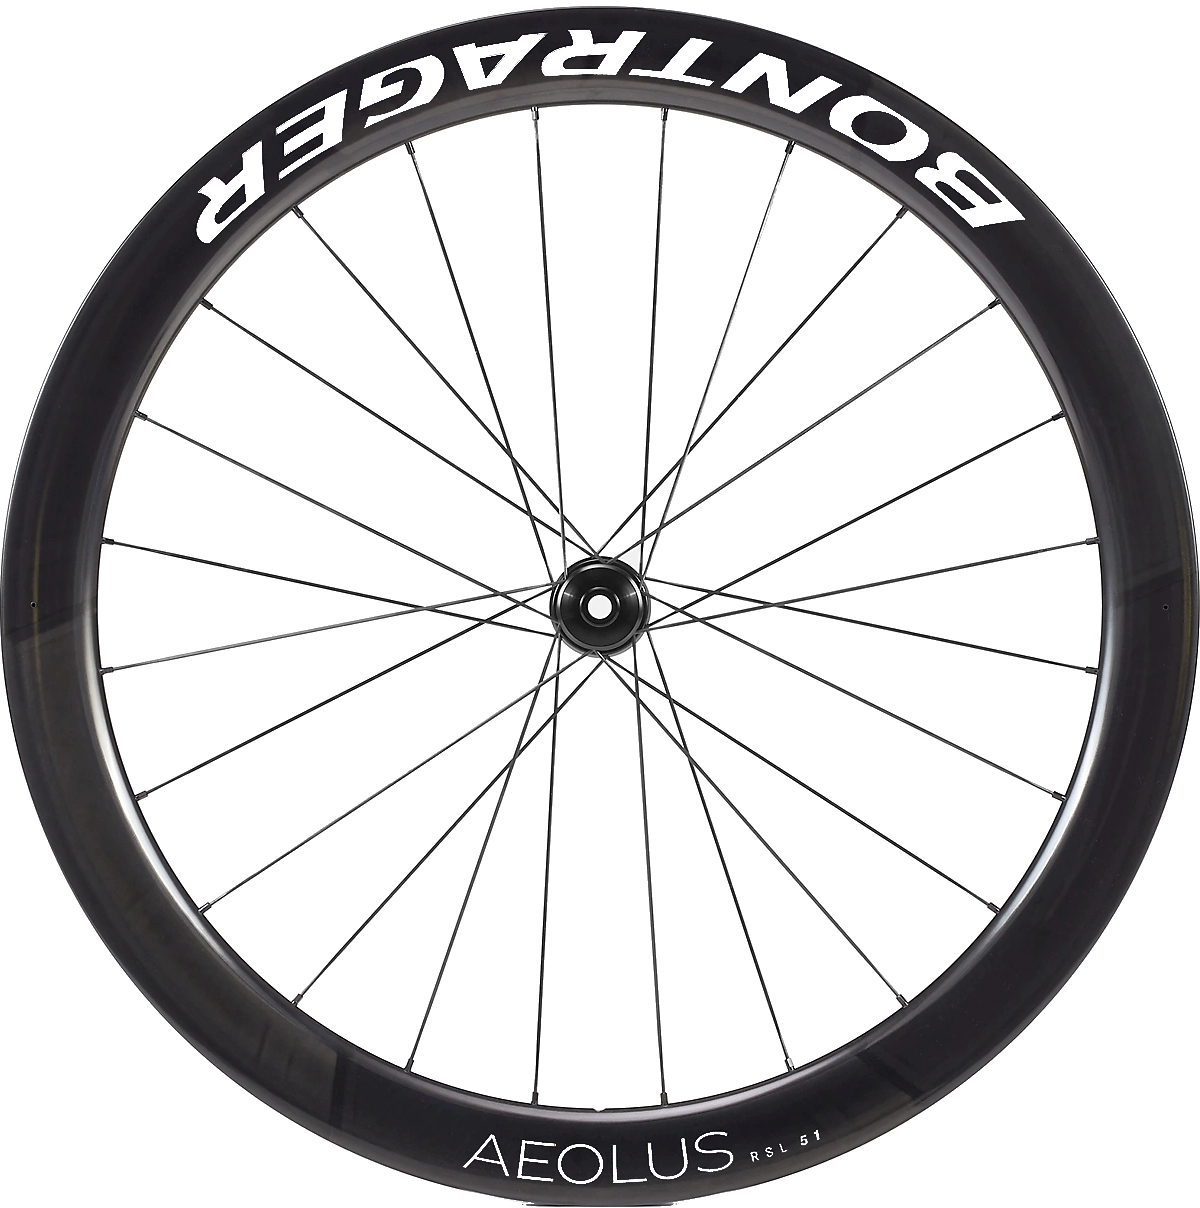 E-shop Bontrager Aeolus RSL 51 TLR Disc Road Wheel - black / white uni